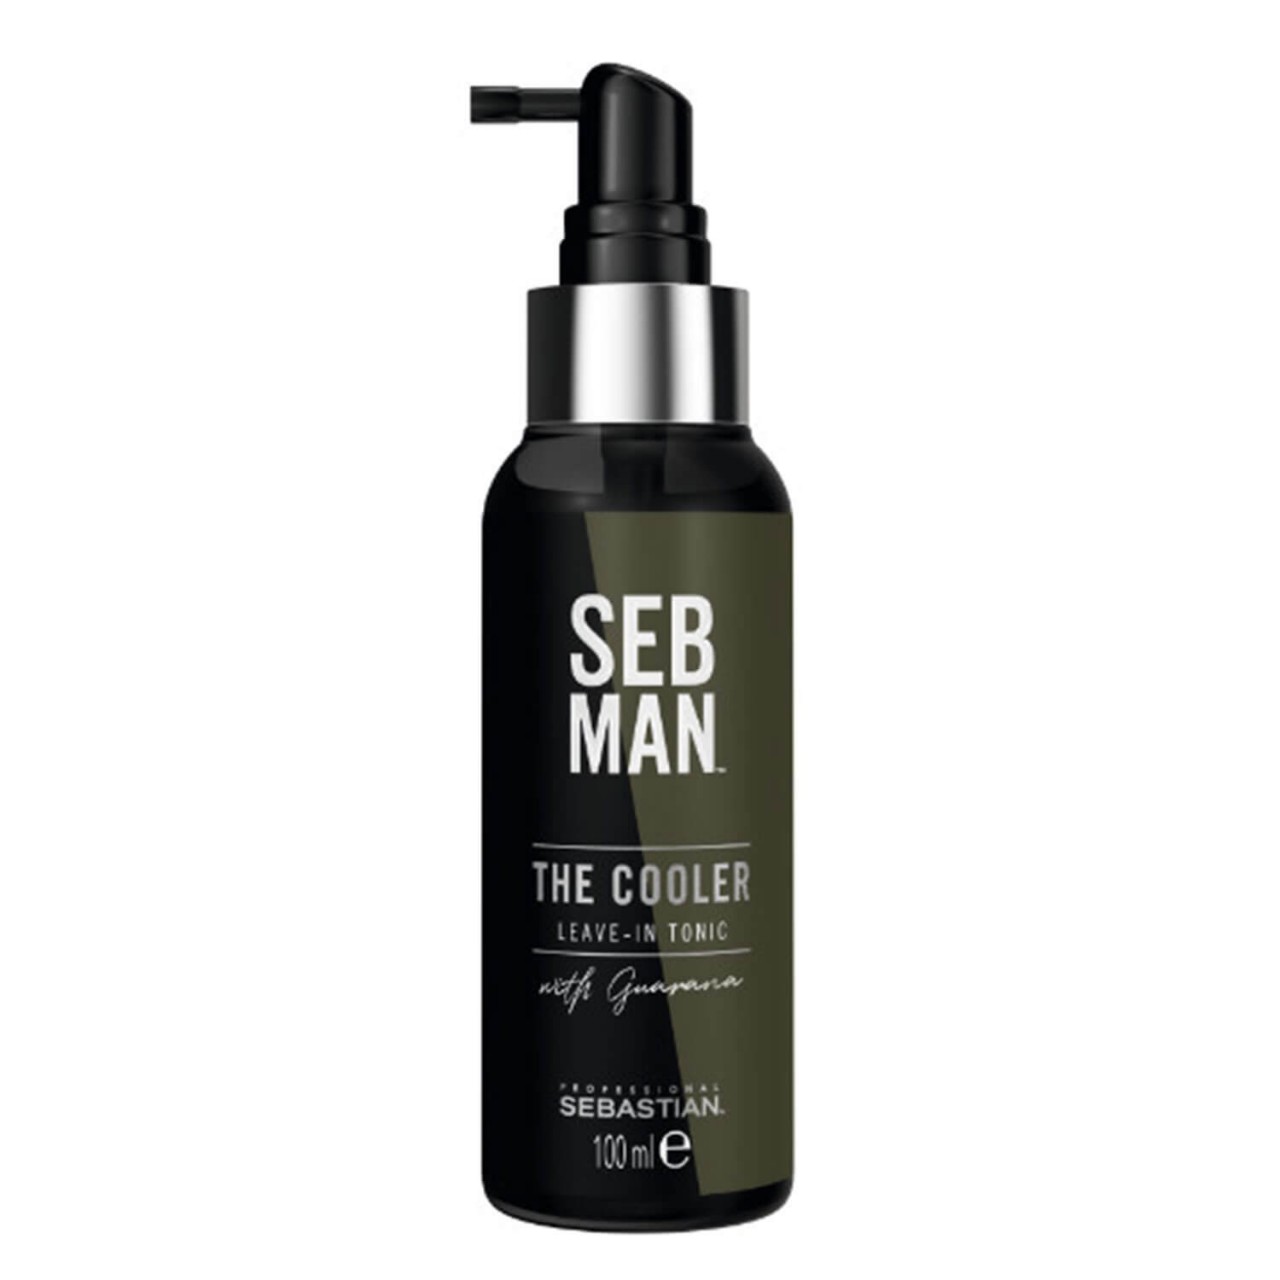 SEB MAN - The Cooler Refreshing Leave-In Tonic von Sebastian